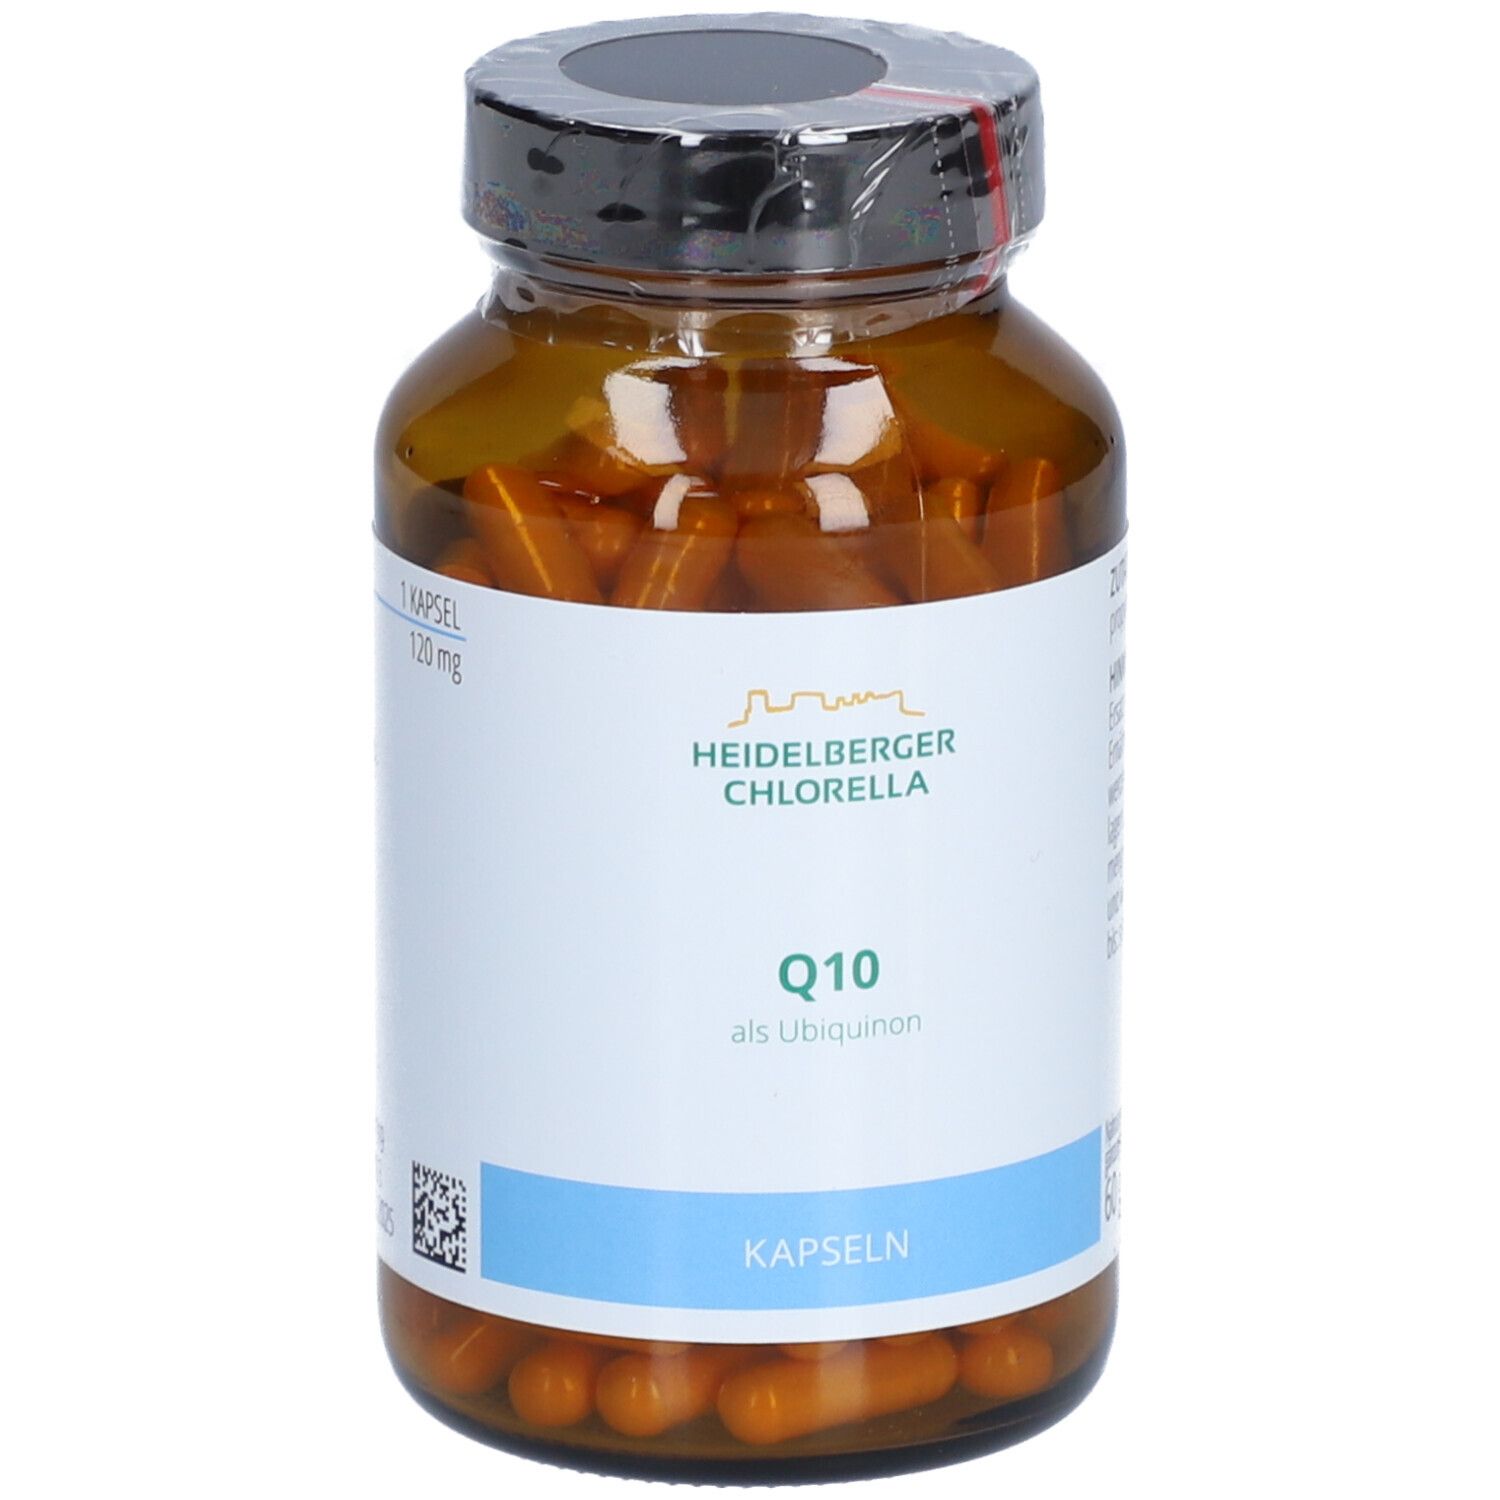 Heidelberger Chlorella® Q10 ALS Ubiquinon